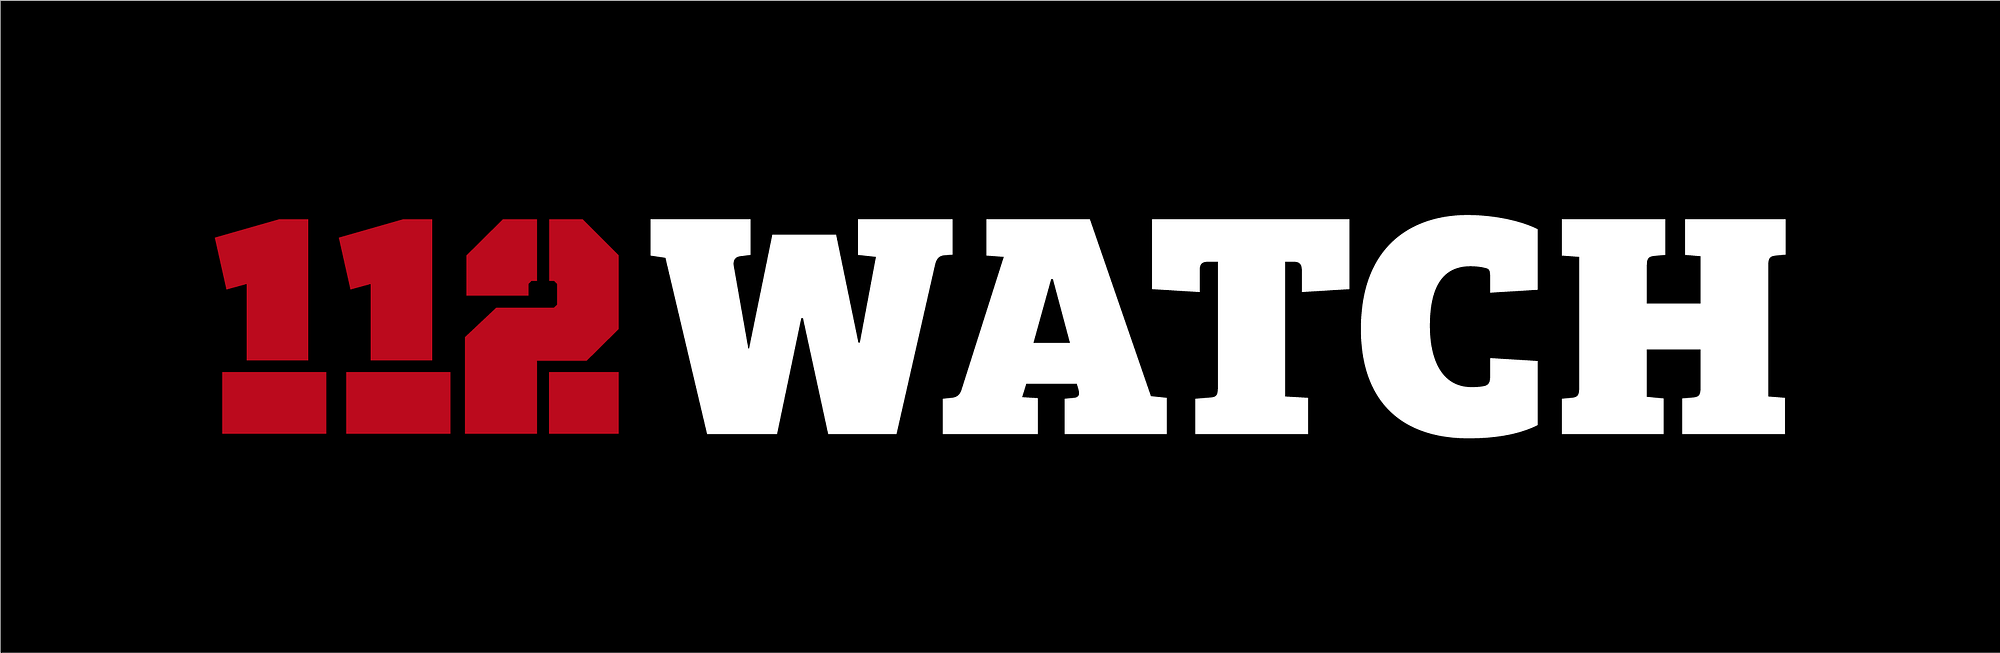 112 Watch Logo